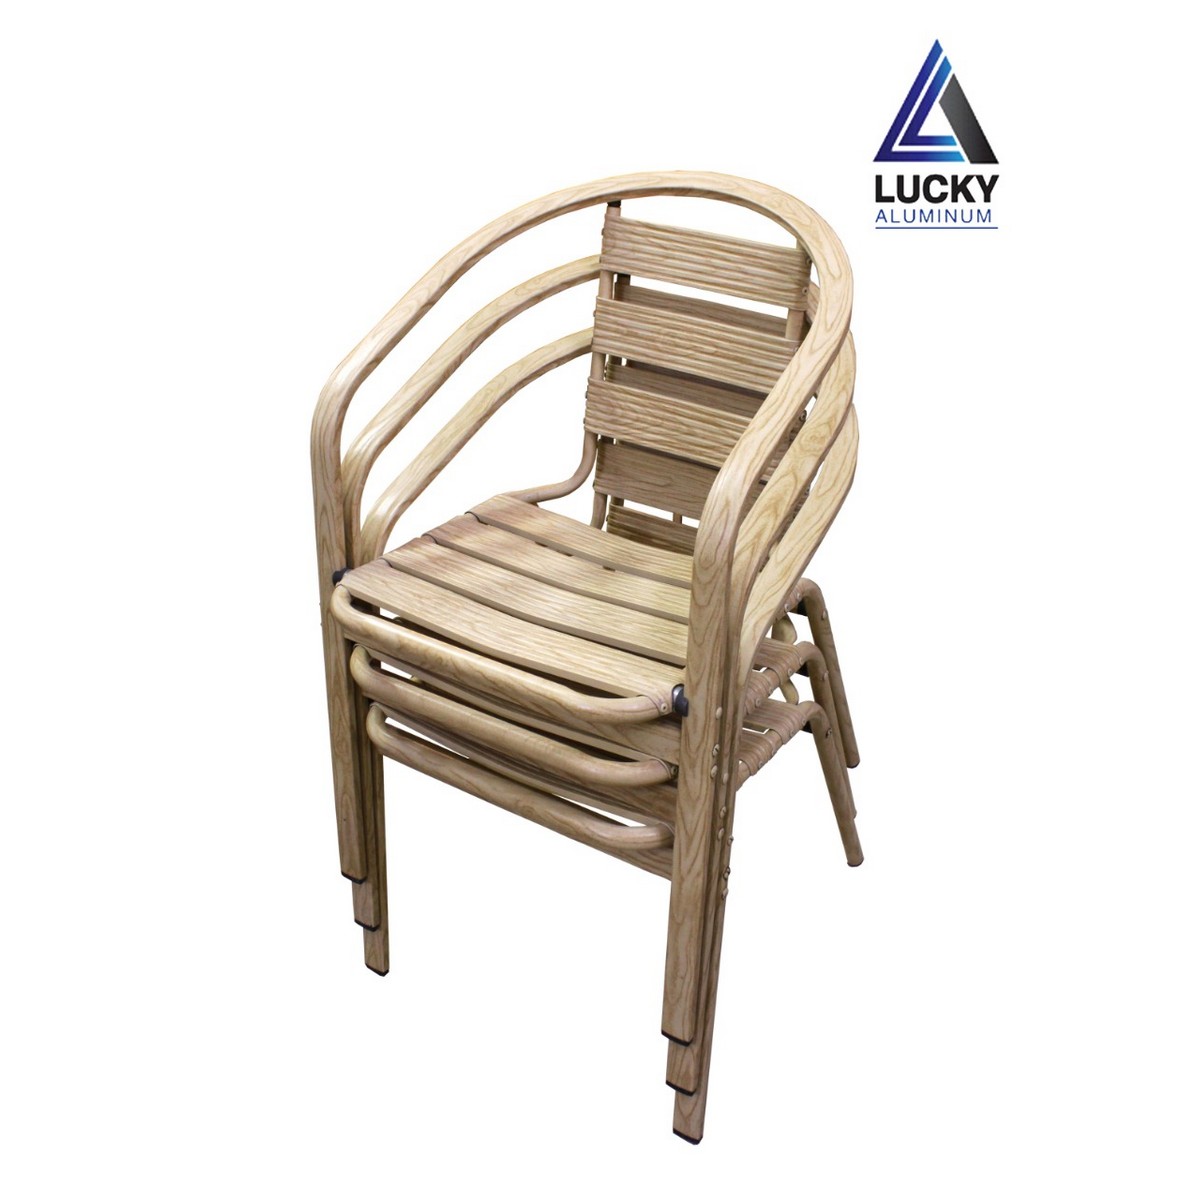 Aluminium Chair - 3 Pieces - Oak Colour